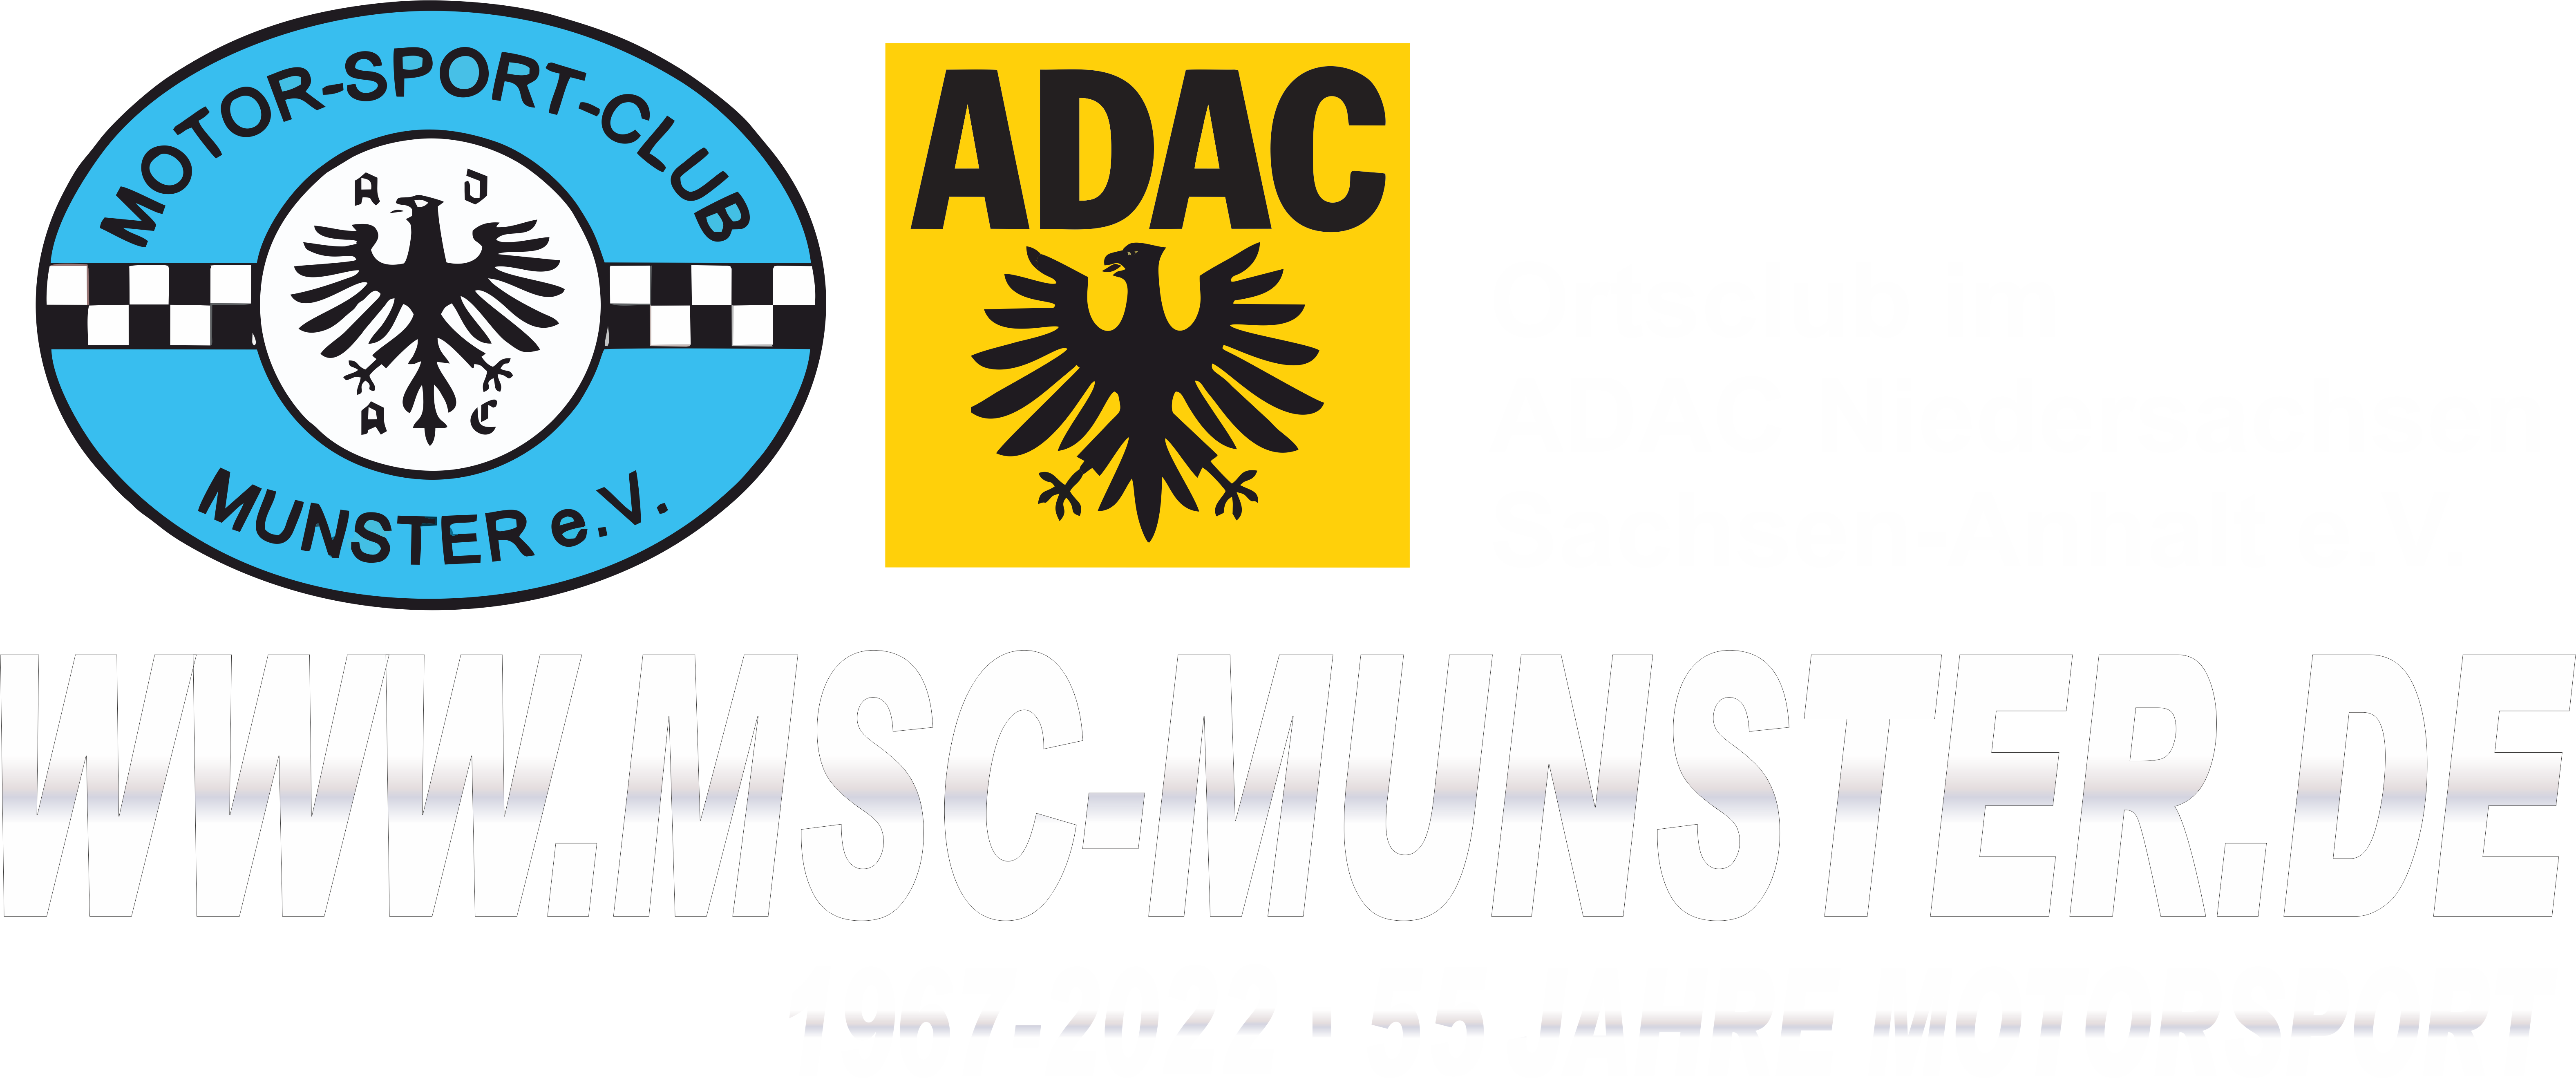 MSC-MUNSTER E.V. IM ADAC